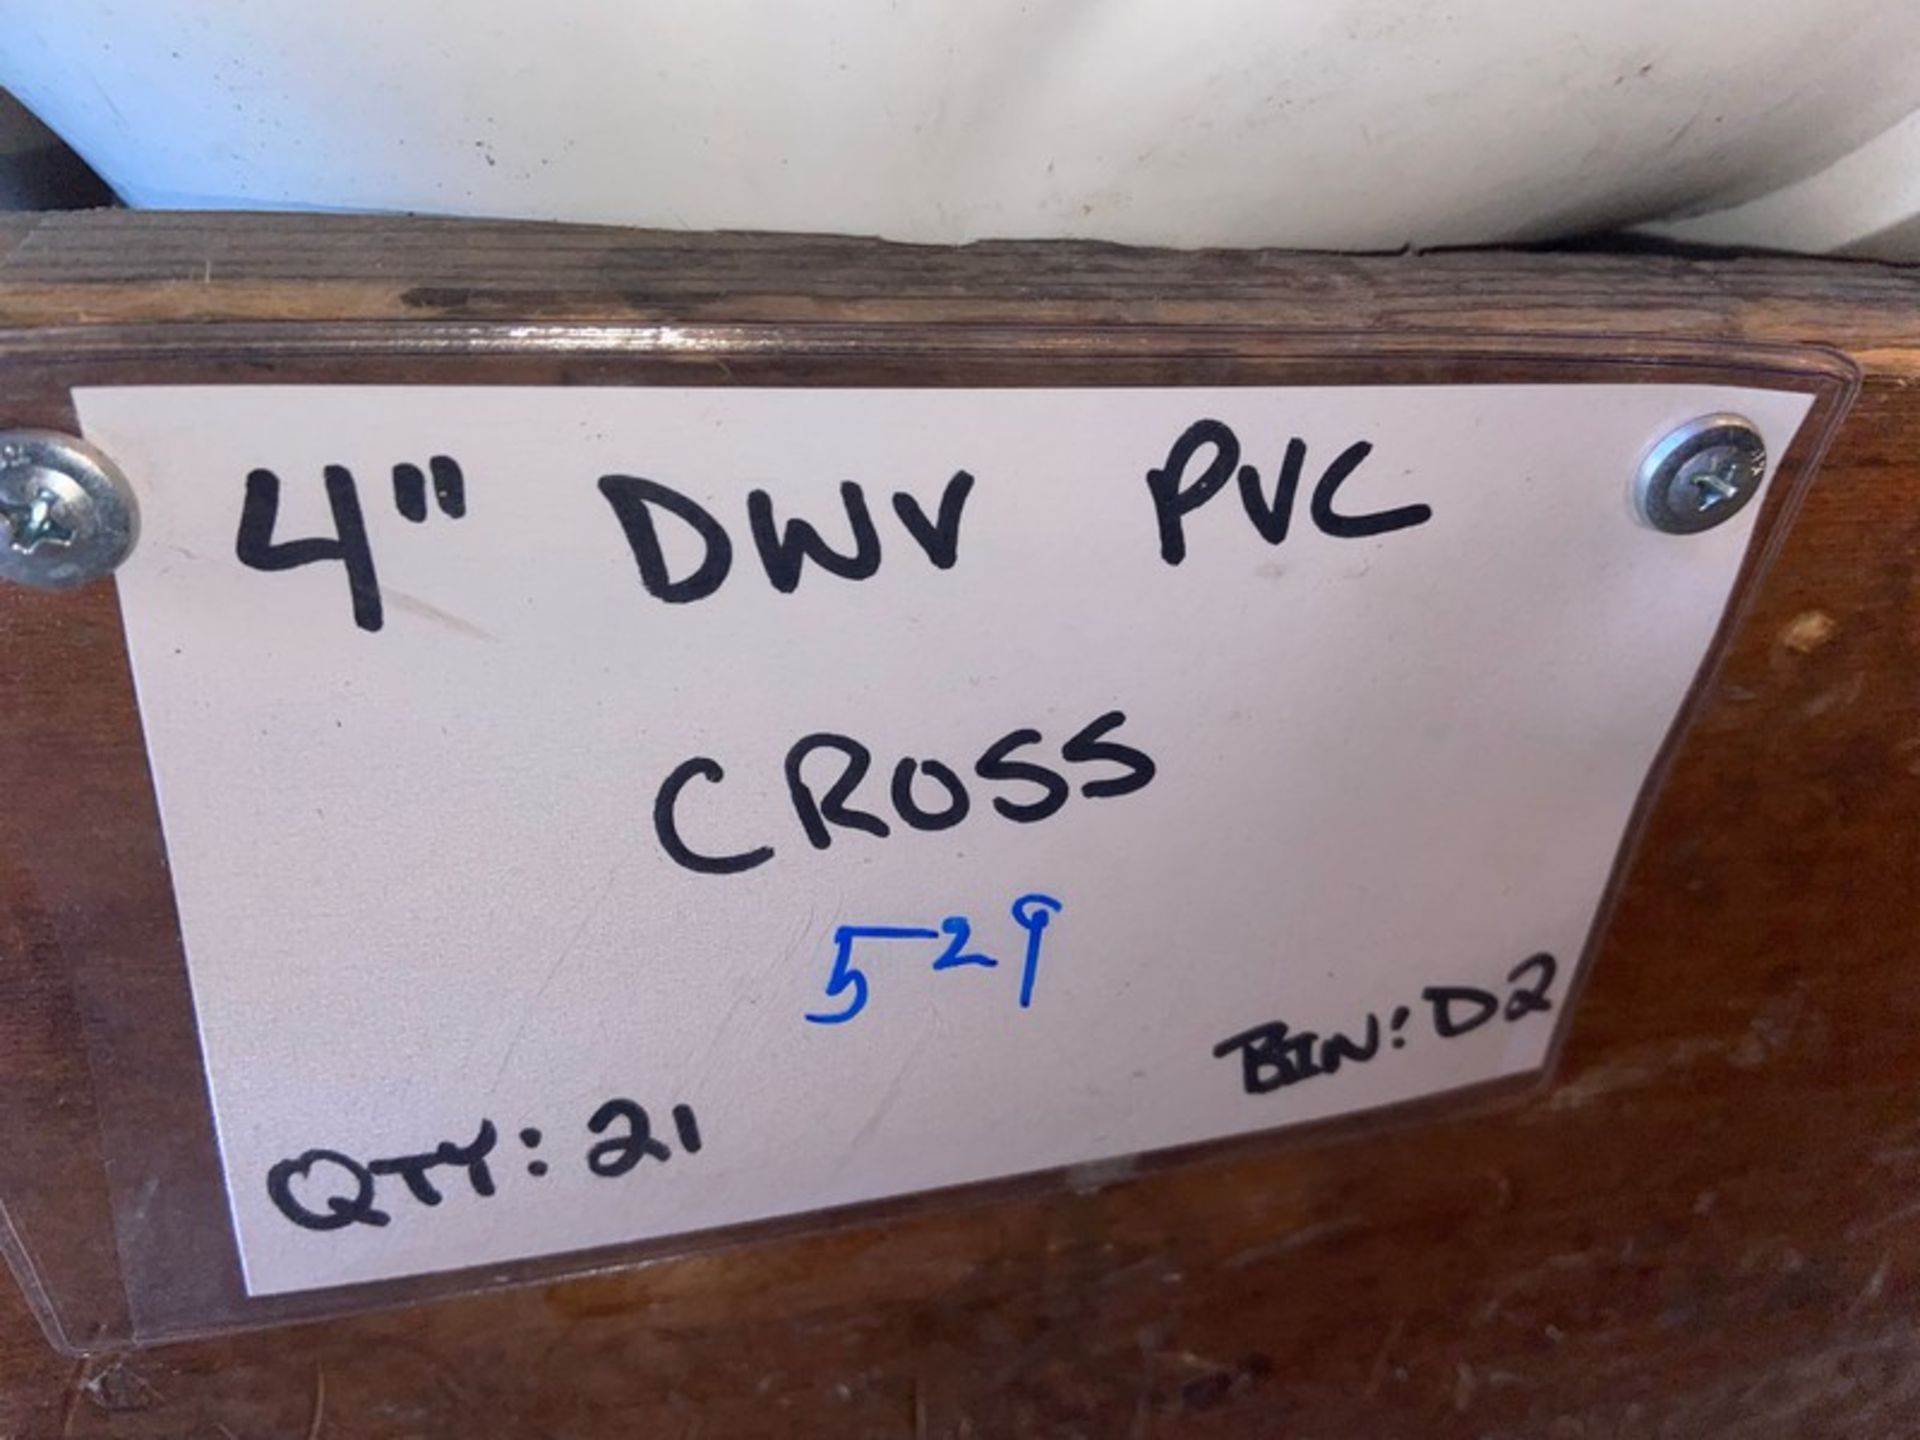 (21) 4” DWV OCC CROSS (Bin:D2) (LOCATED IN MONROEVILLE, PA) - Bild 4 aus 4